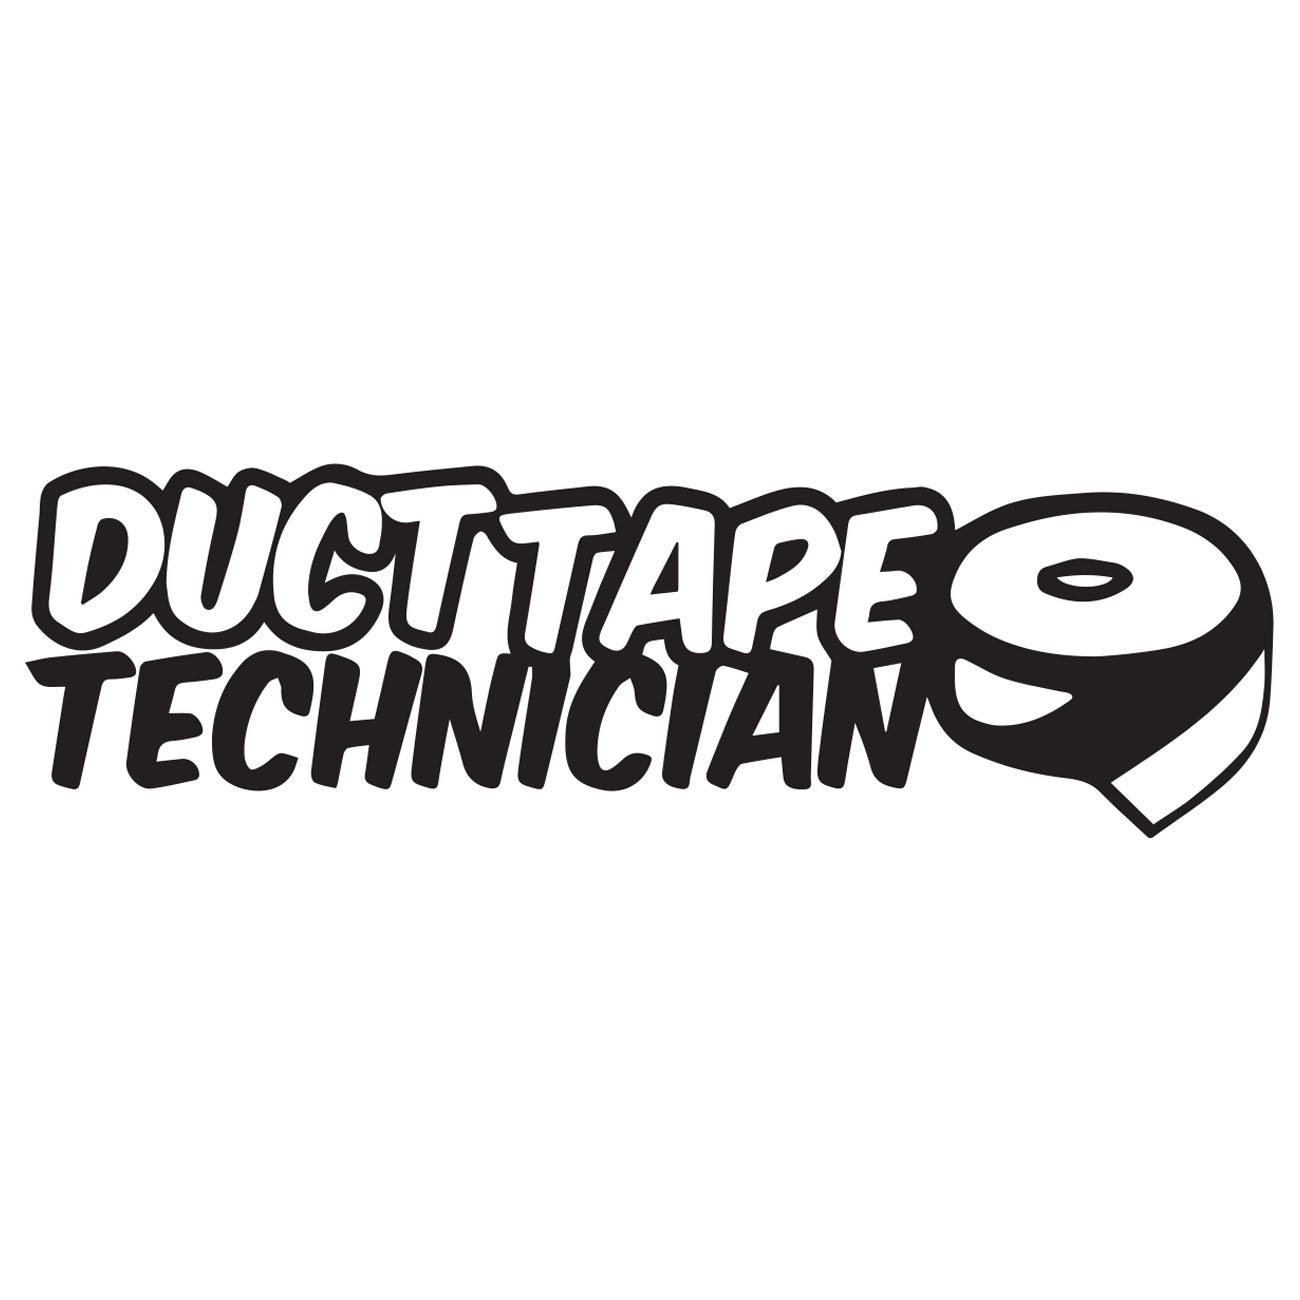 Ducktape technician